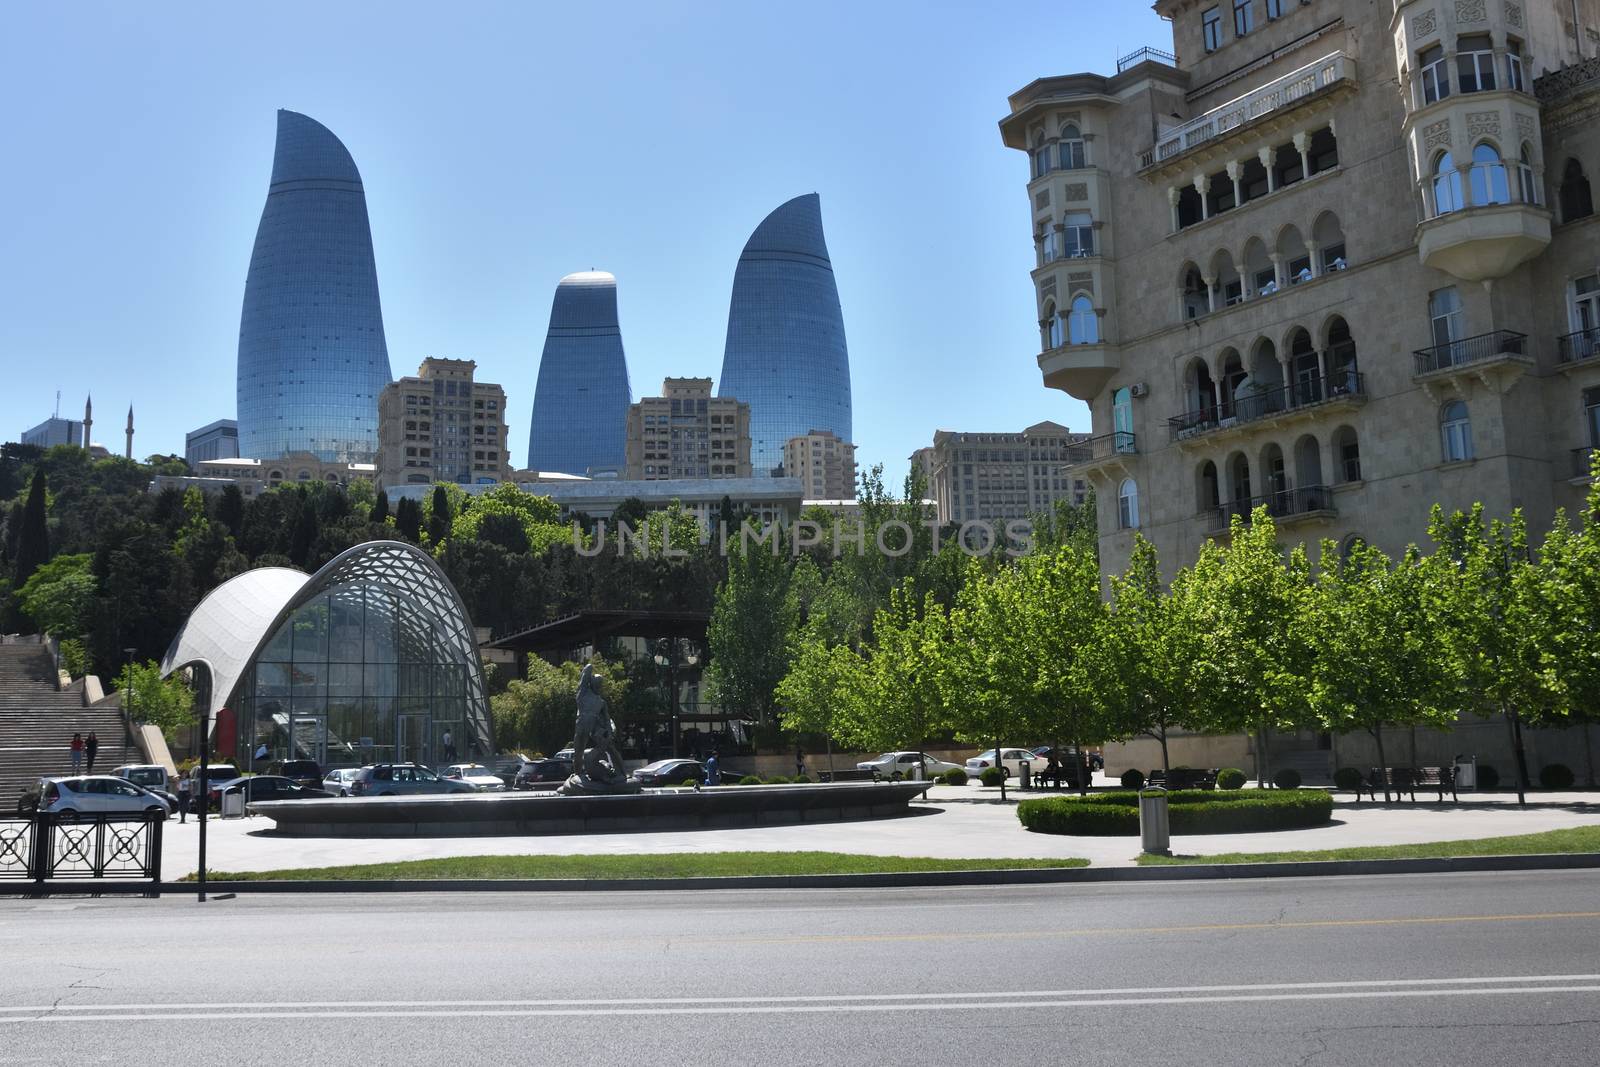 View of Baku from the road near the bouleward on the Caspian Sea in Azerbaijan.